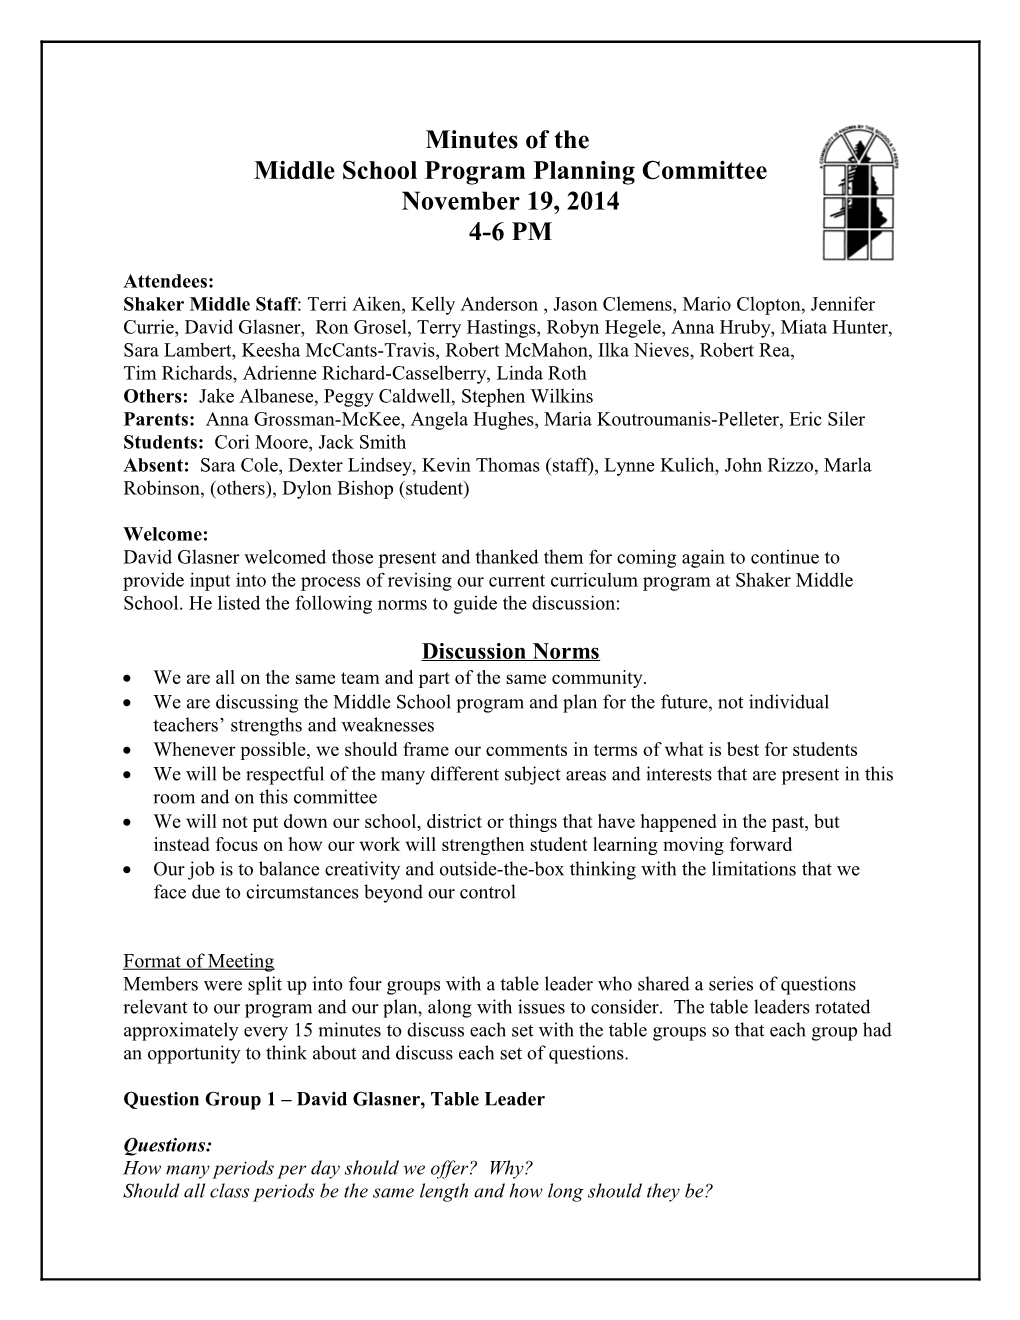 Middle School Program Planning Committee